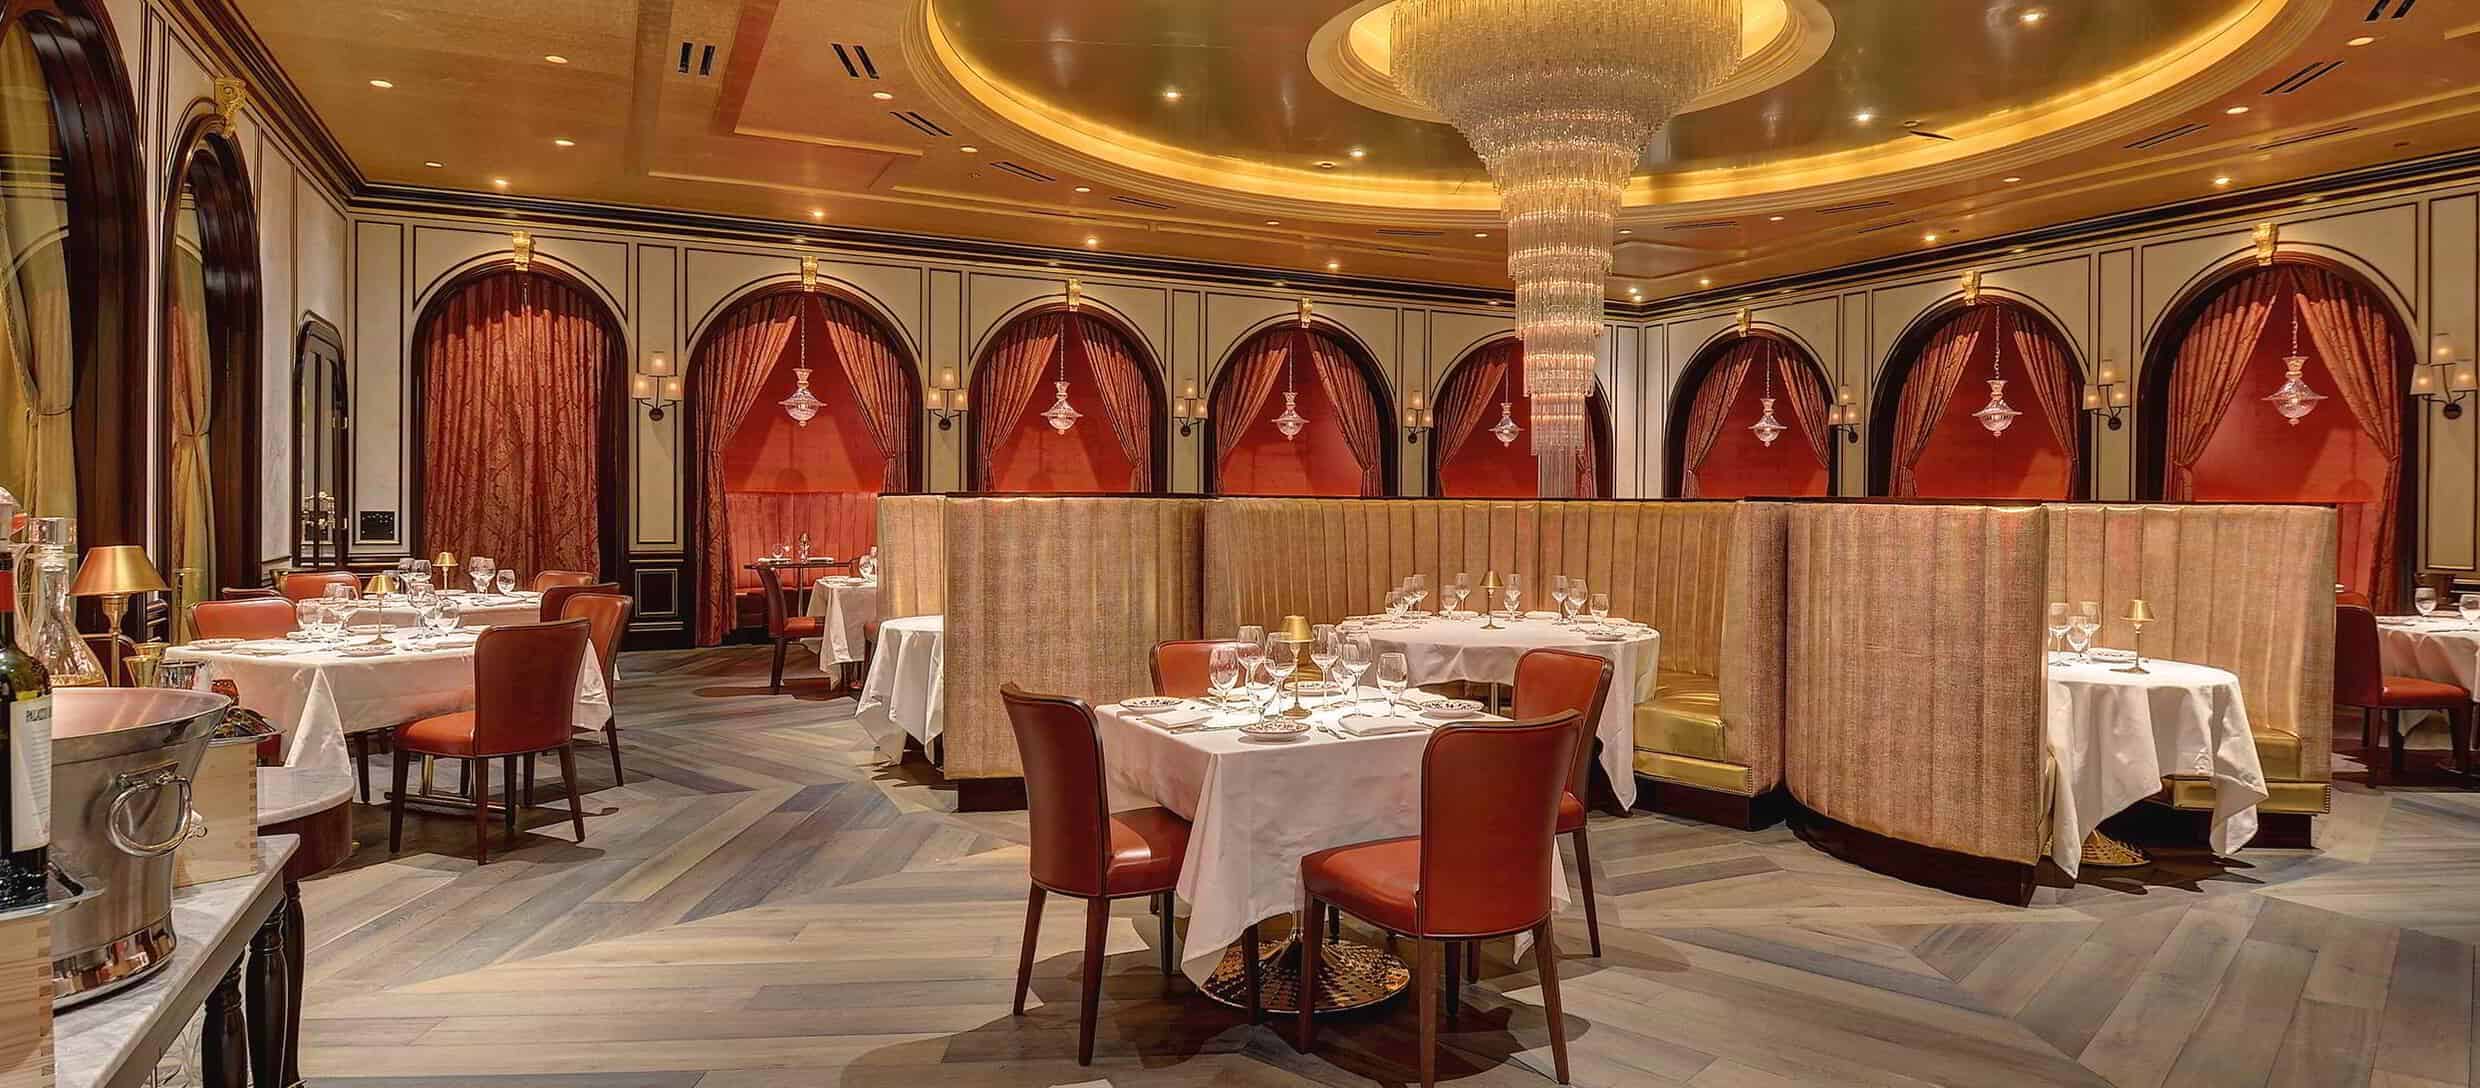 Carbone Vegas luxury italian dining area